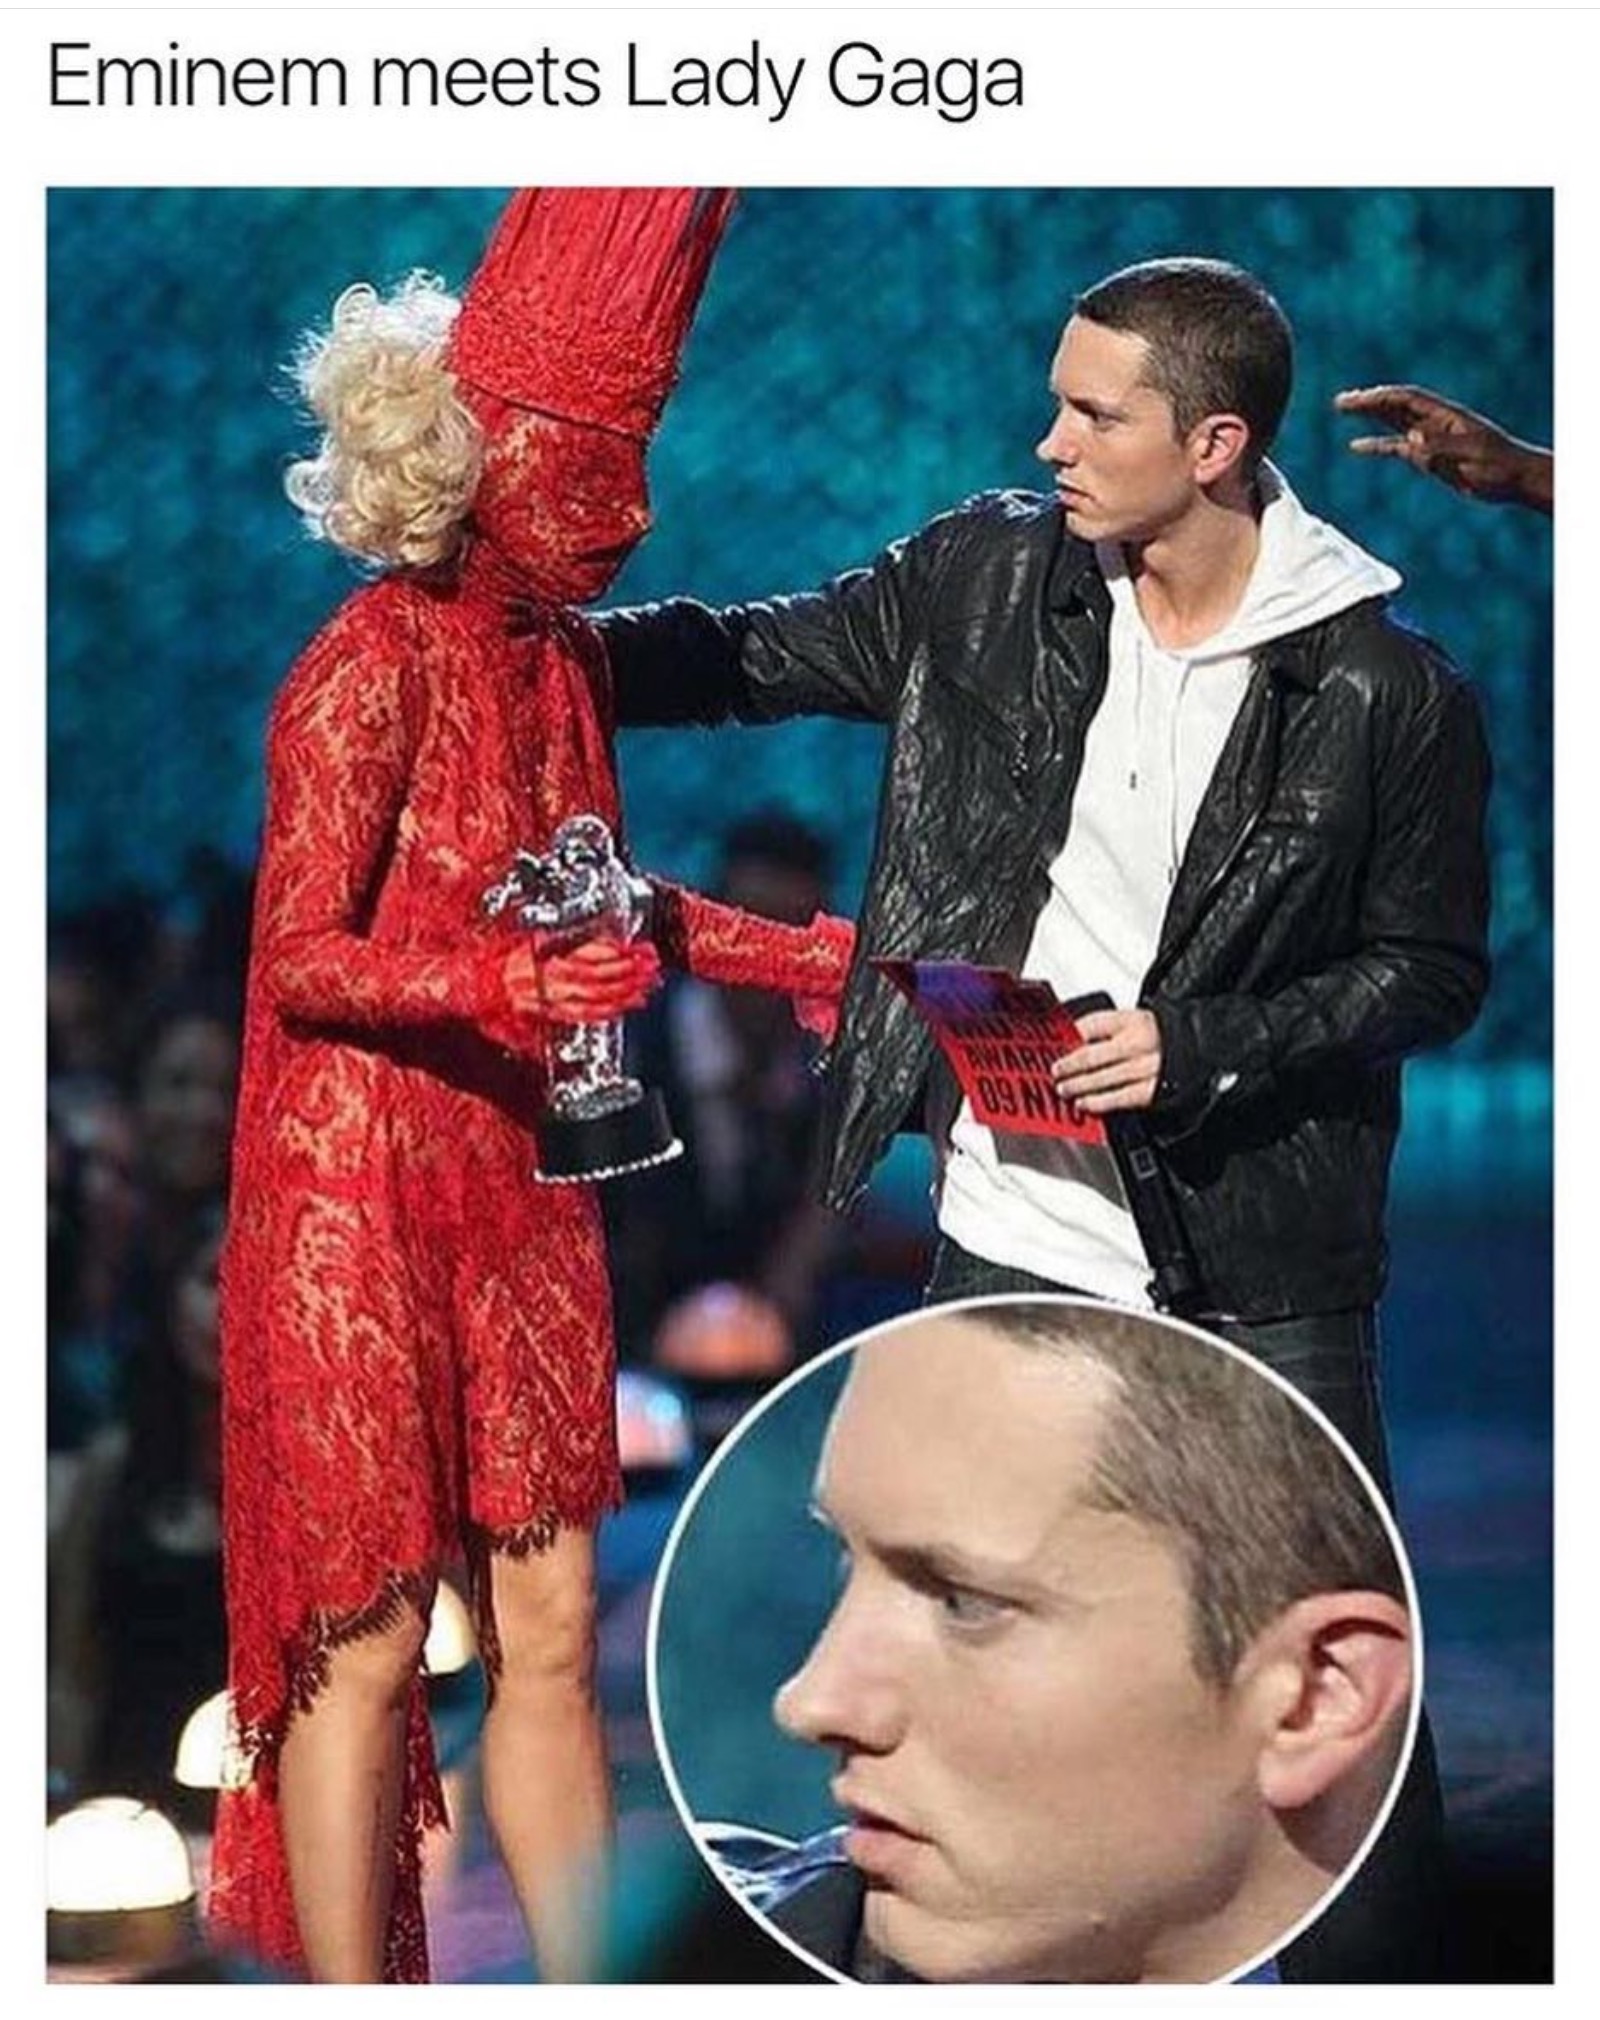 Dank meme of Eminem shocked when meeting Lady Gaga